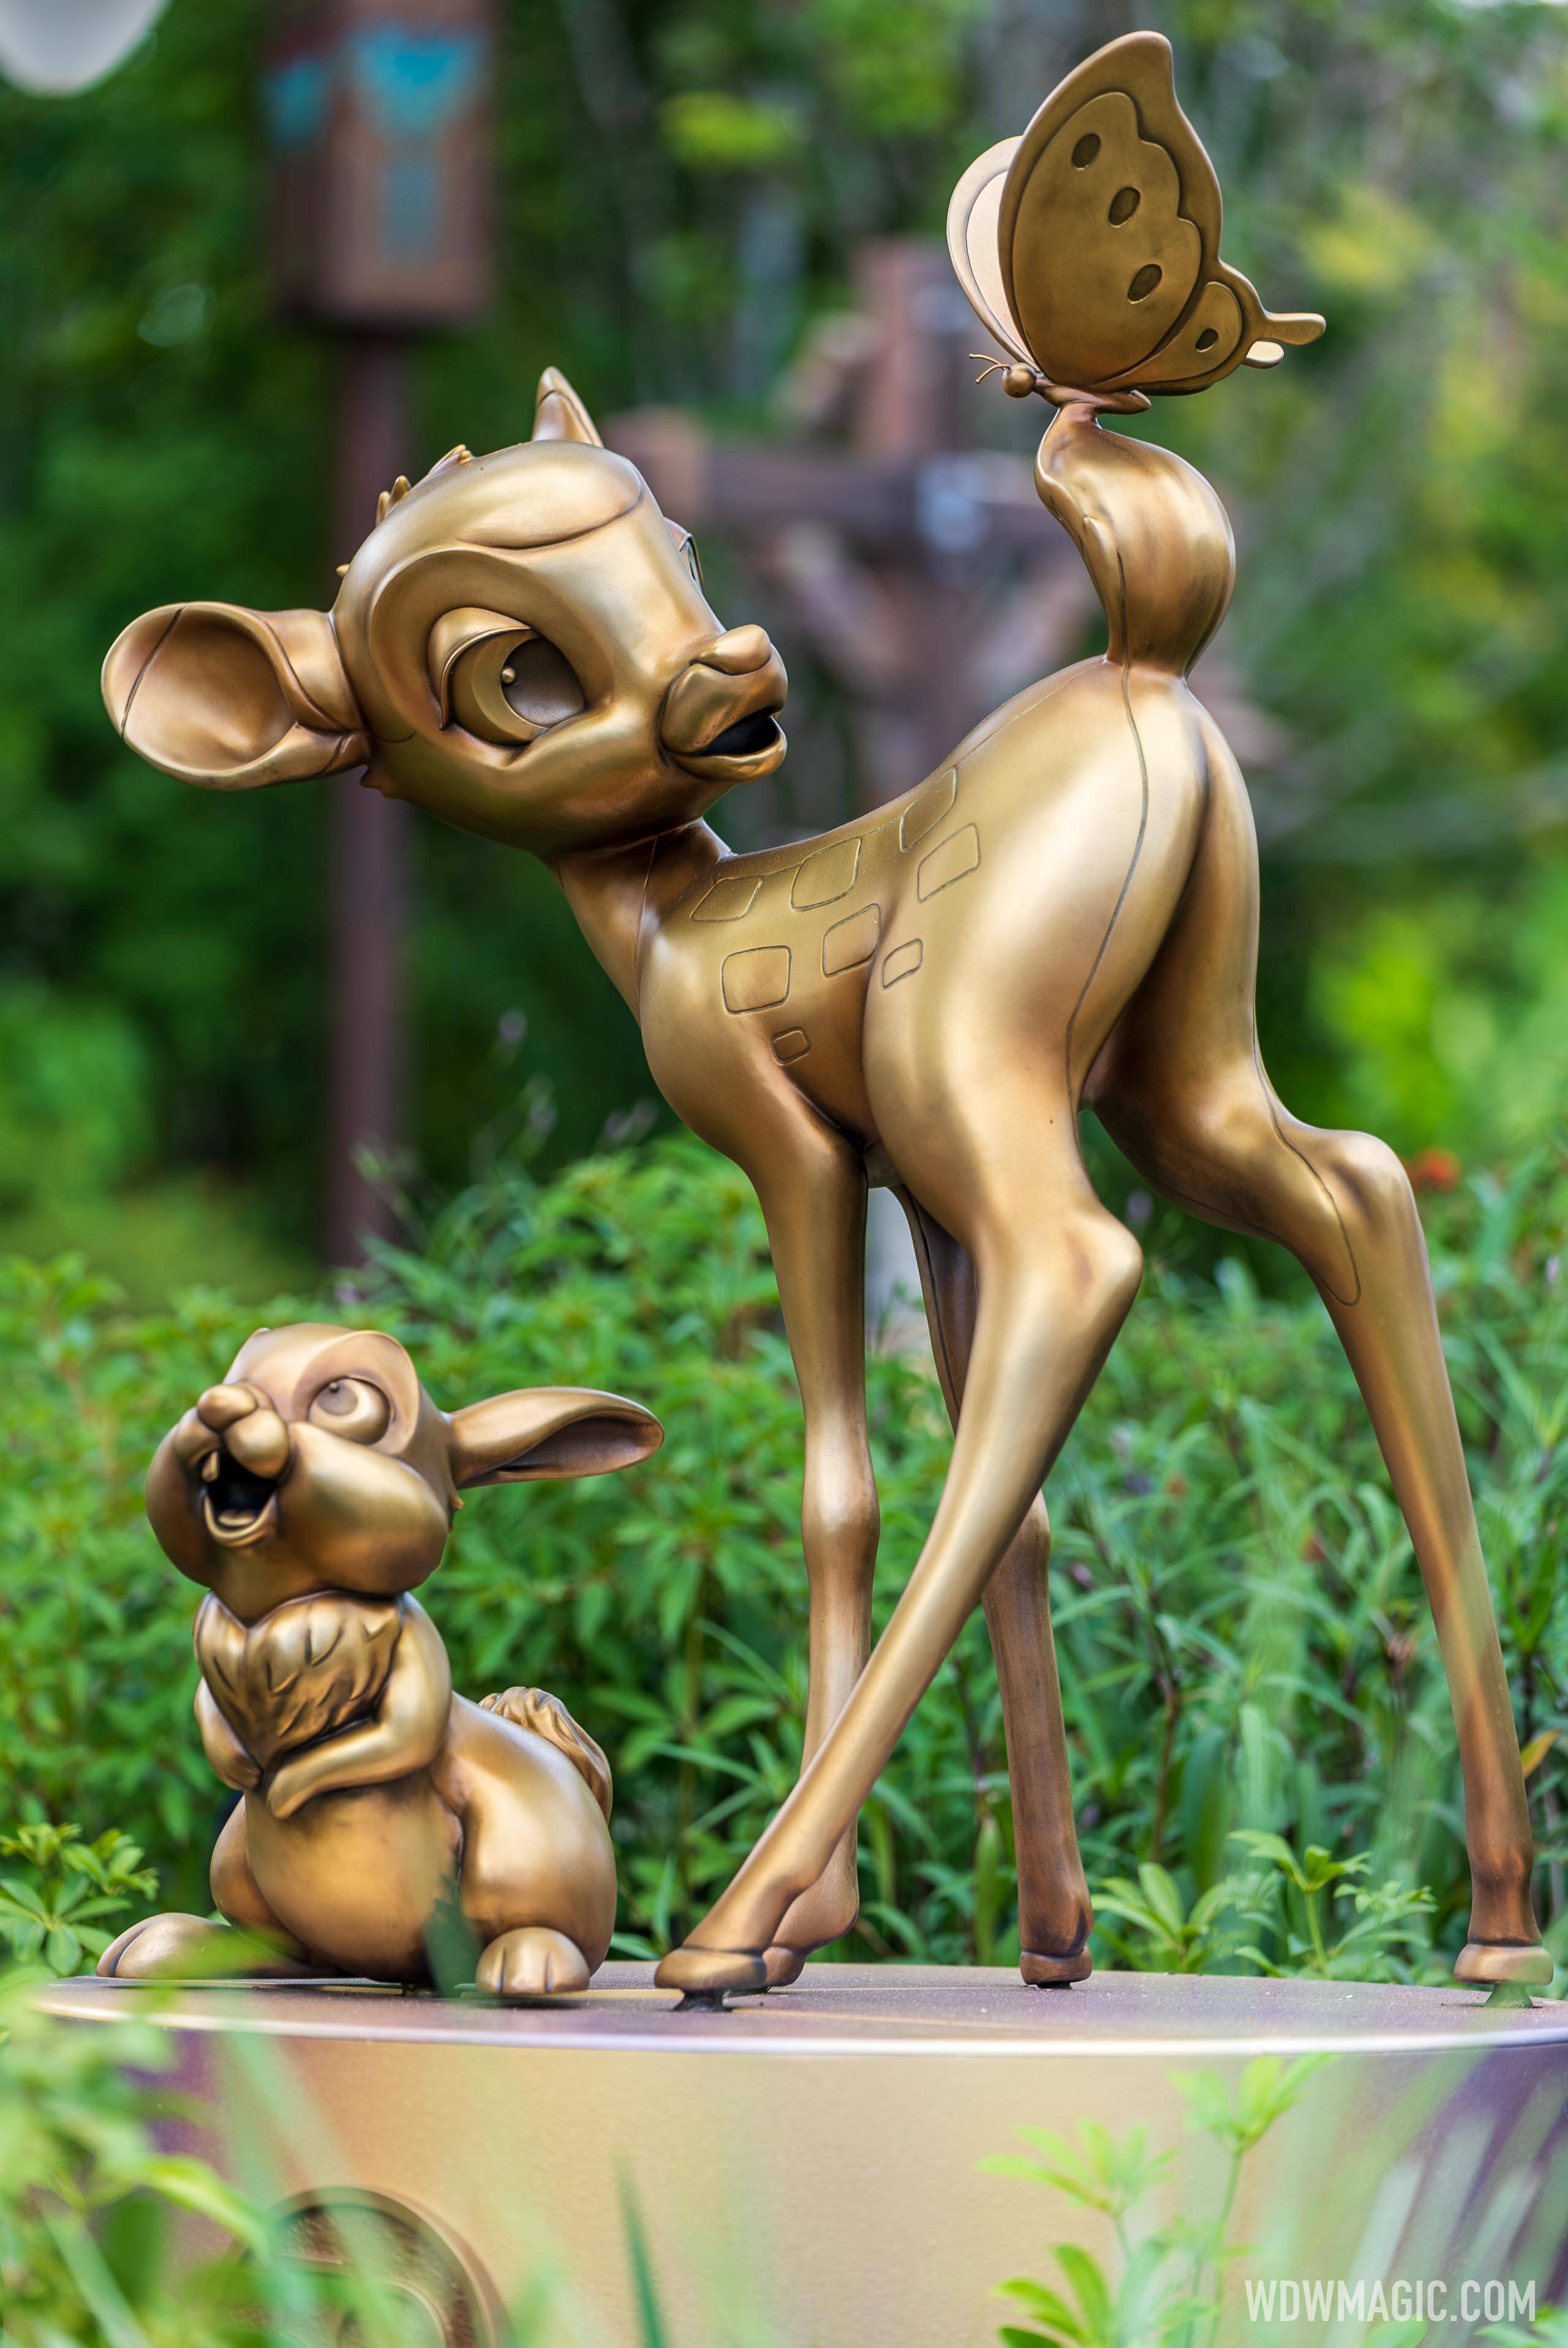 Disney Fab 50 golden character statues at Disney's Animal Kingdom